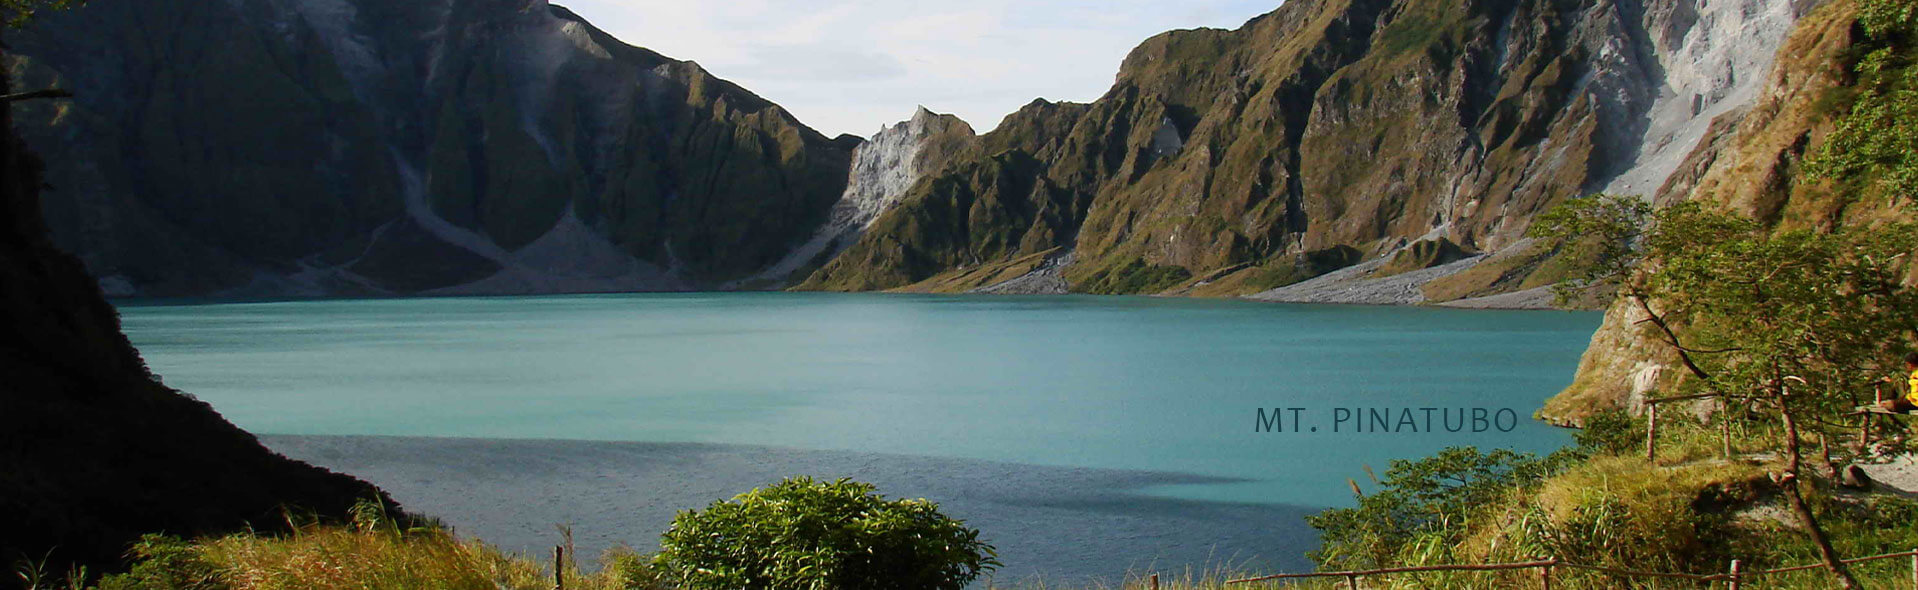 Central Luzon - Mt. Pinatubo